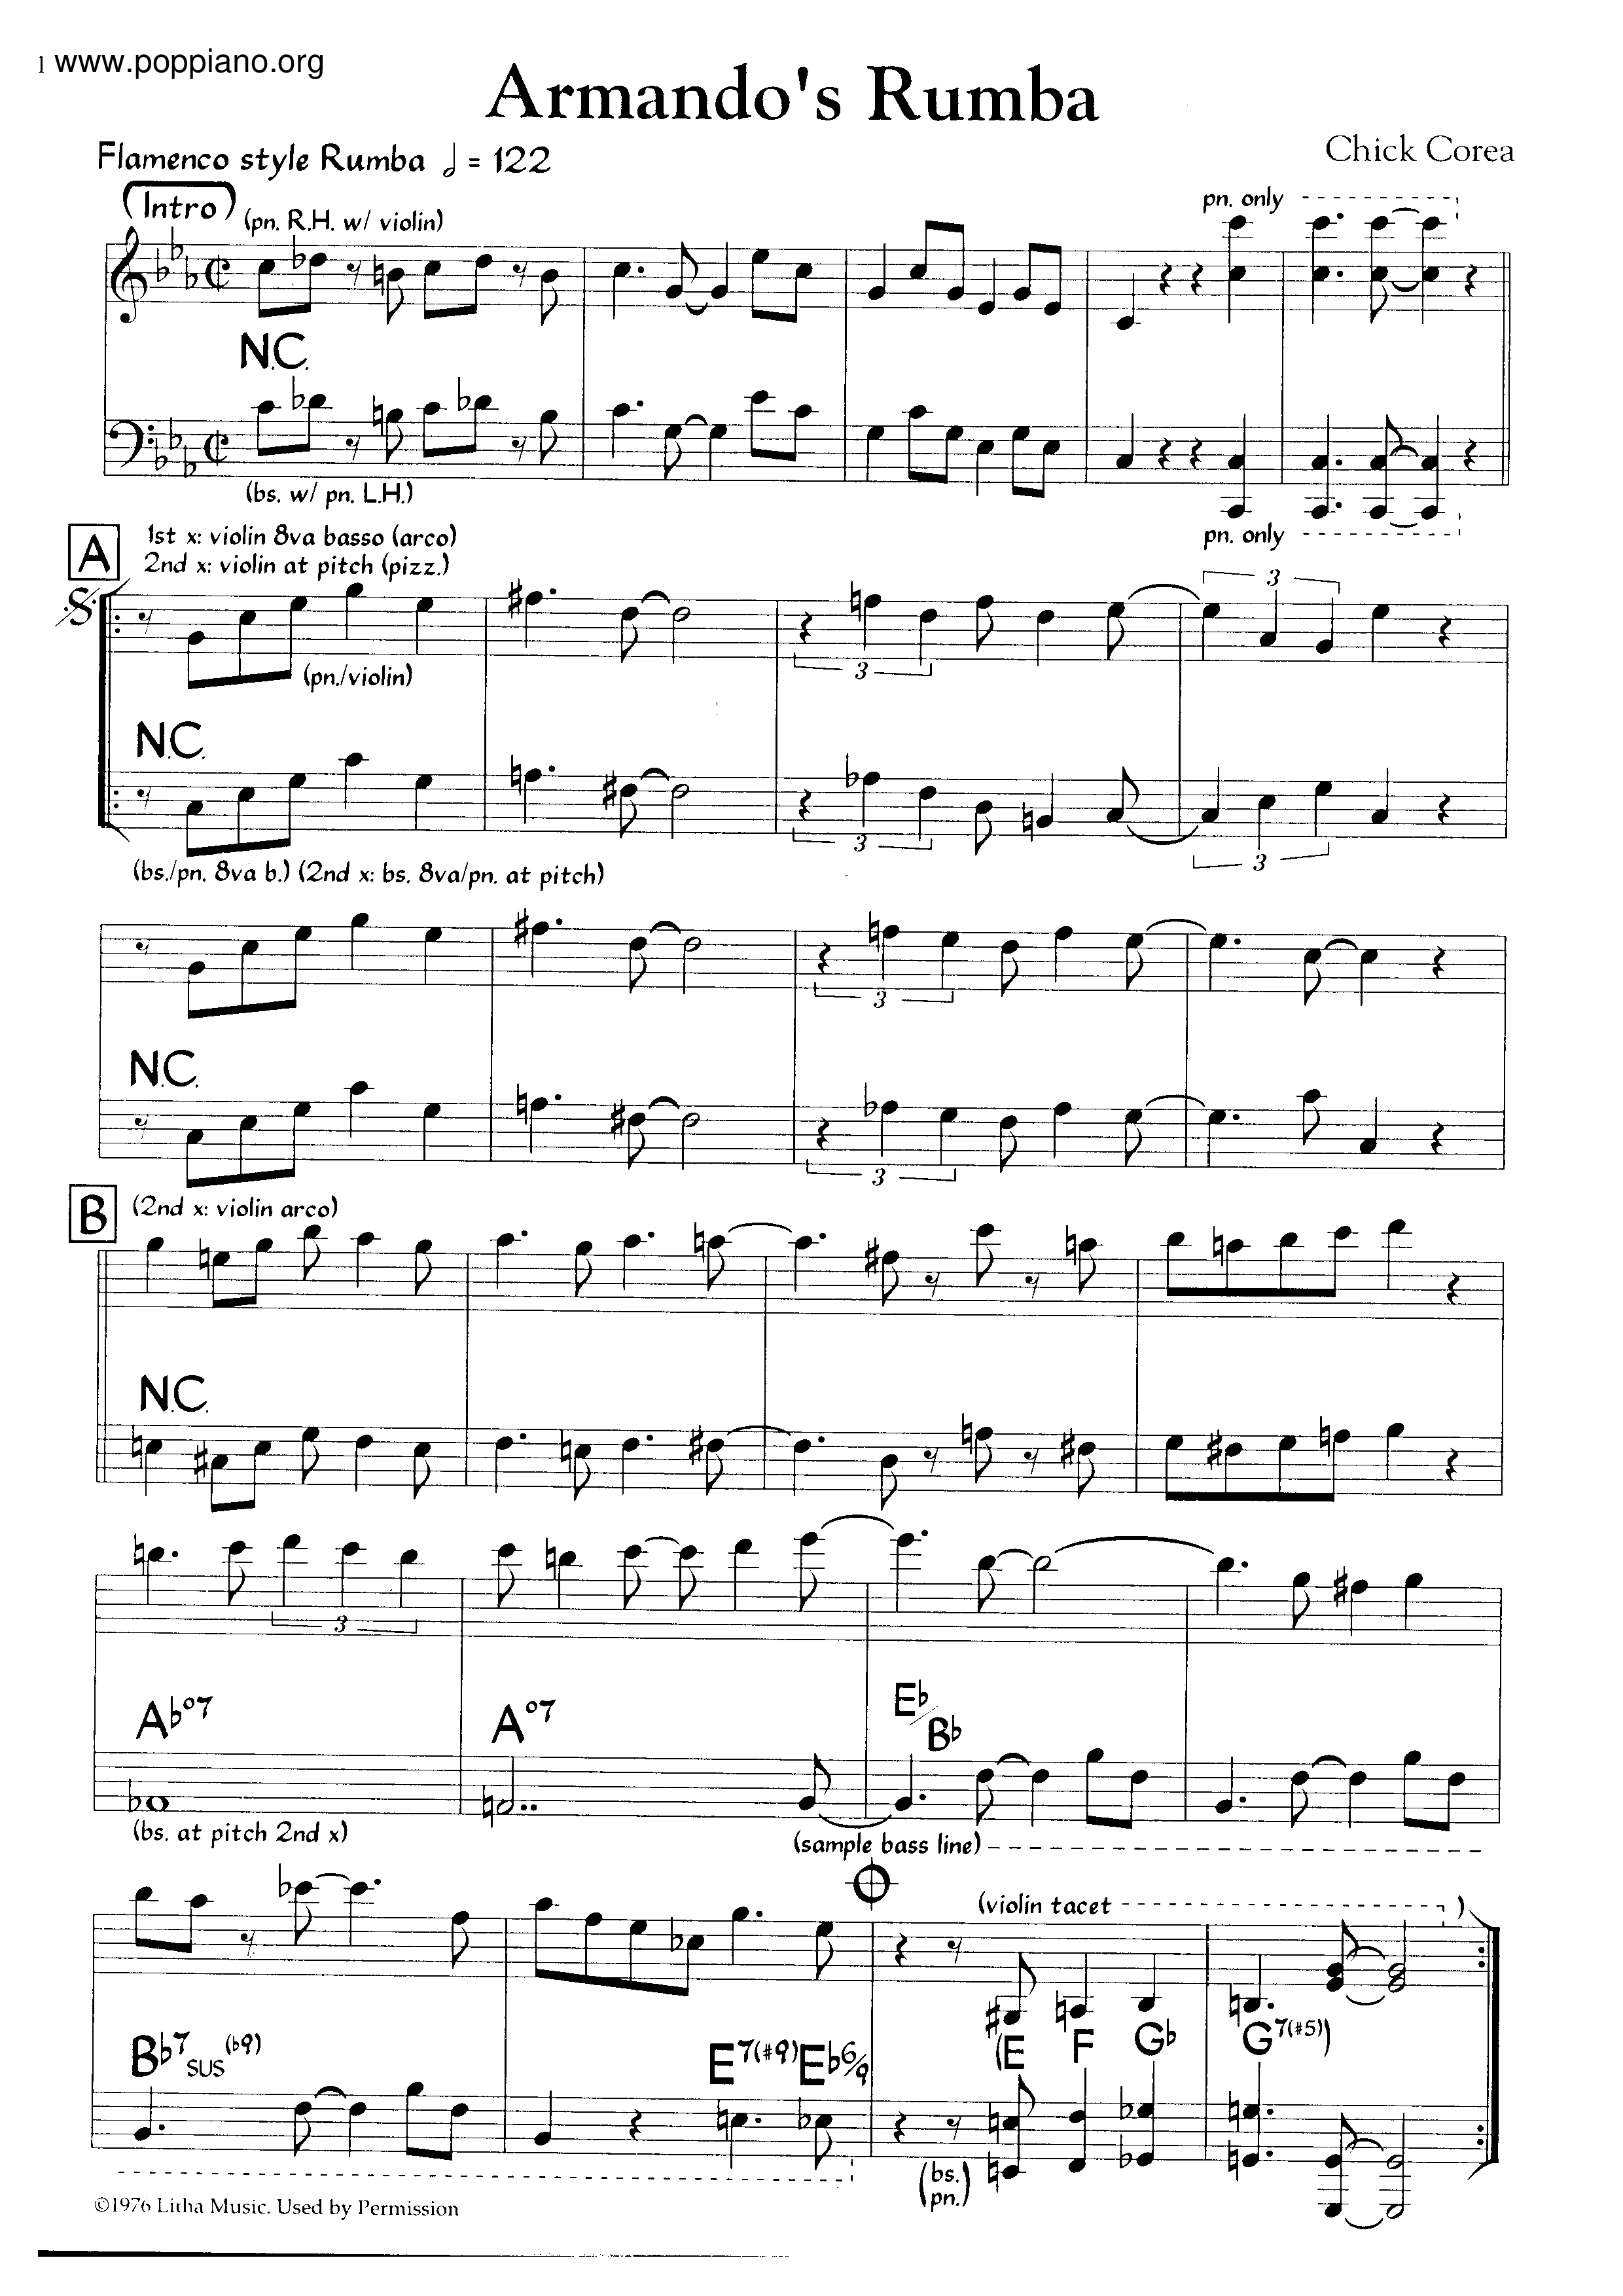 Armando's Rhumbaピアノ譜